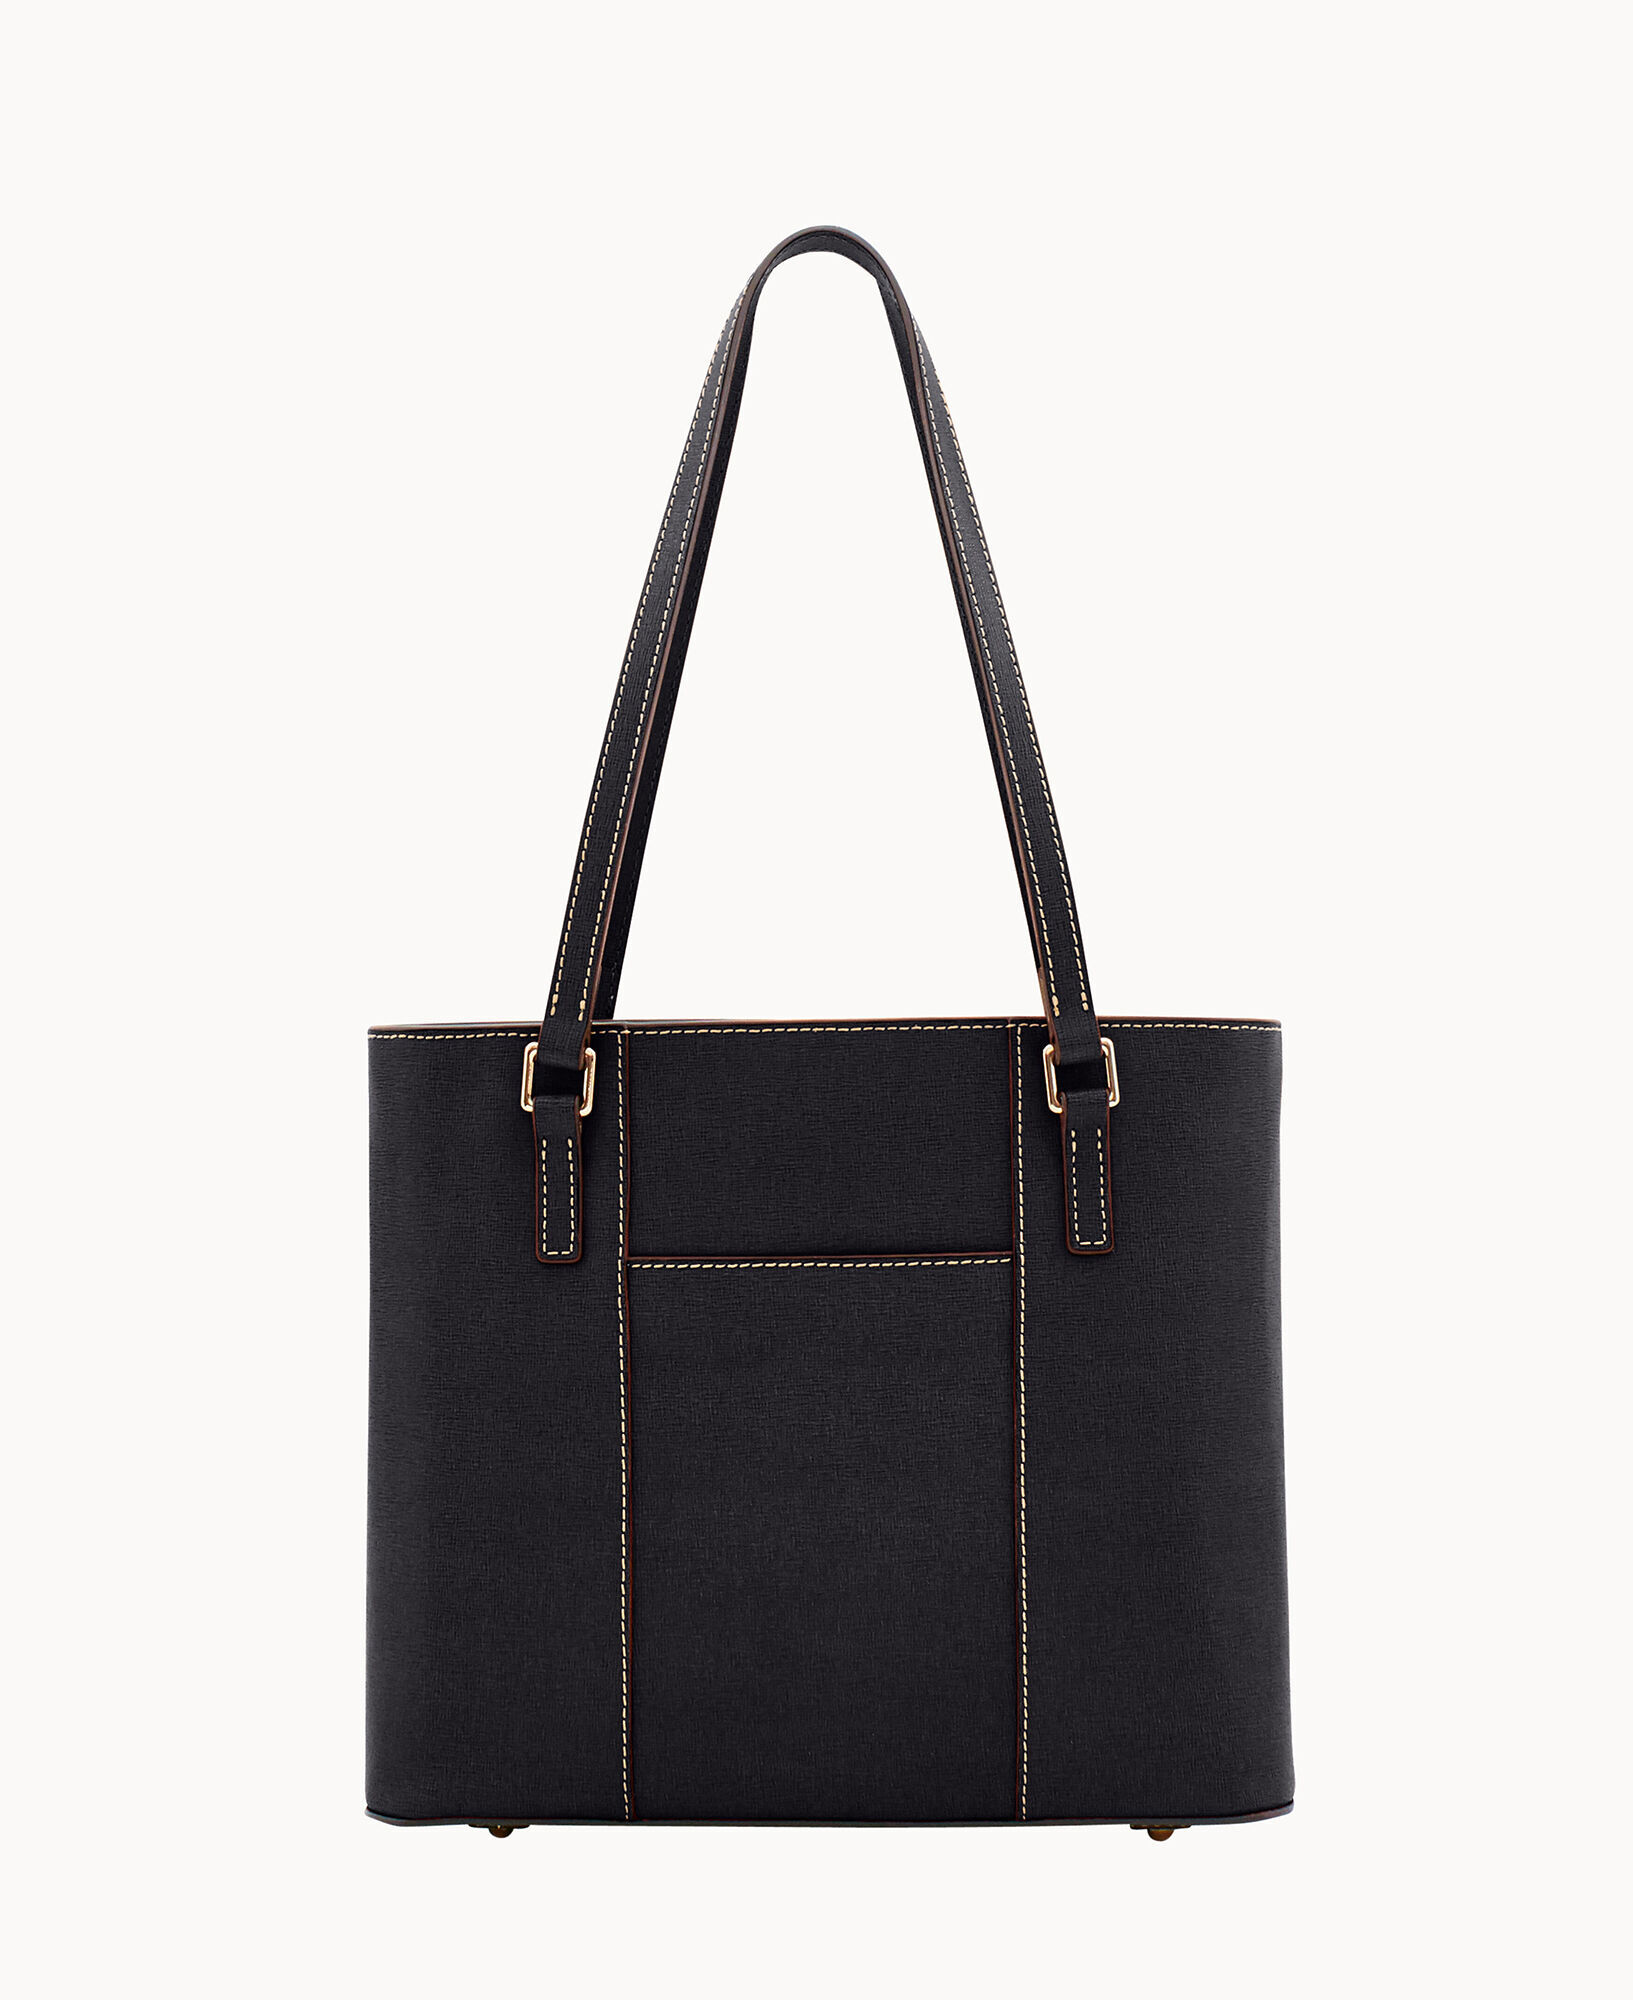 Black Dooney & Bourke Saffiano Leather Small Crossbody Bag